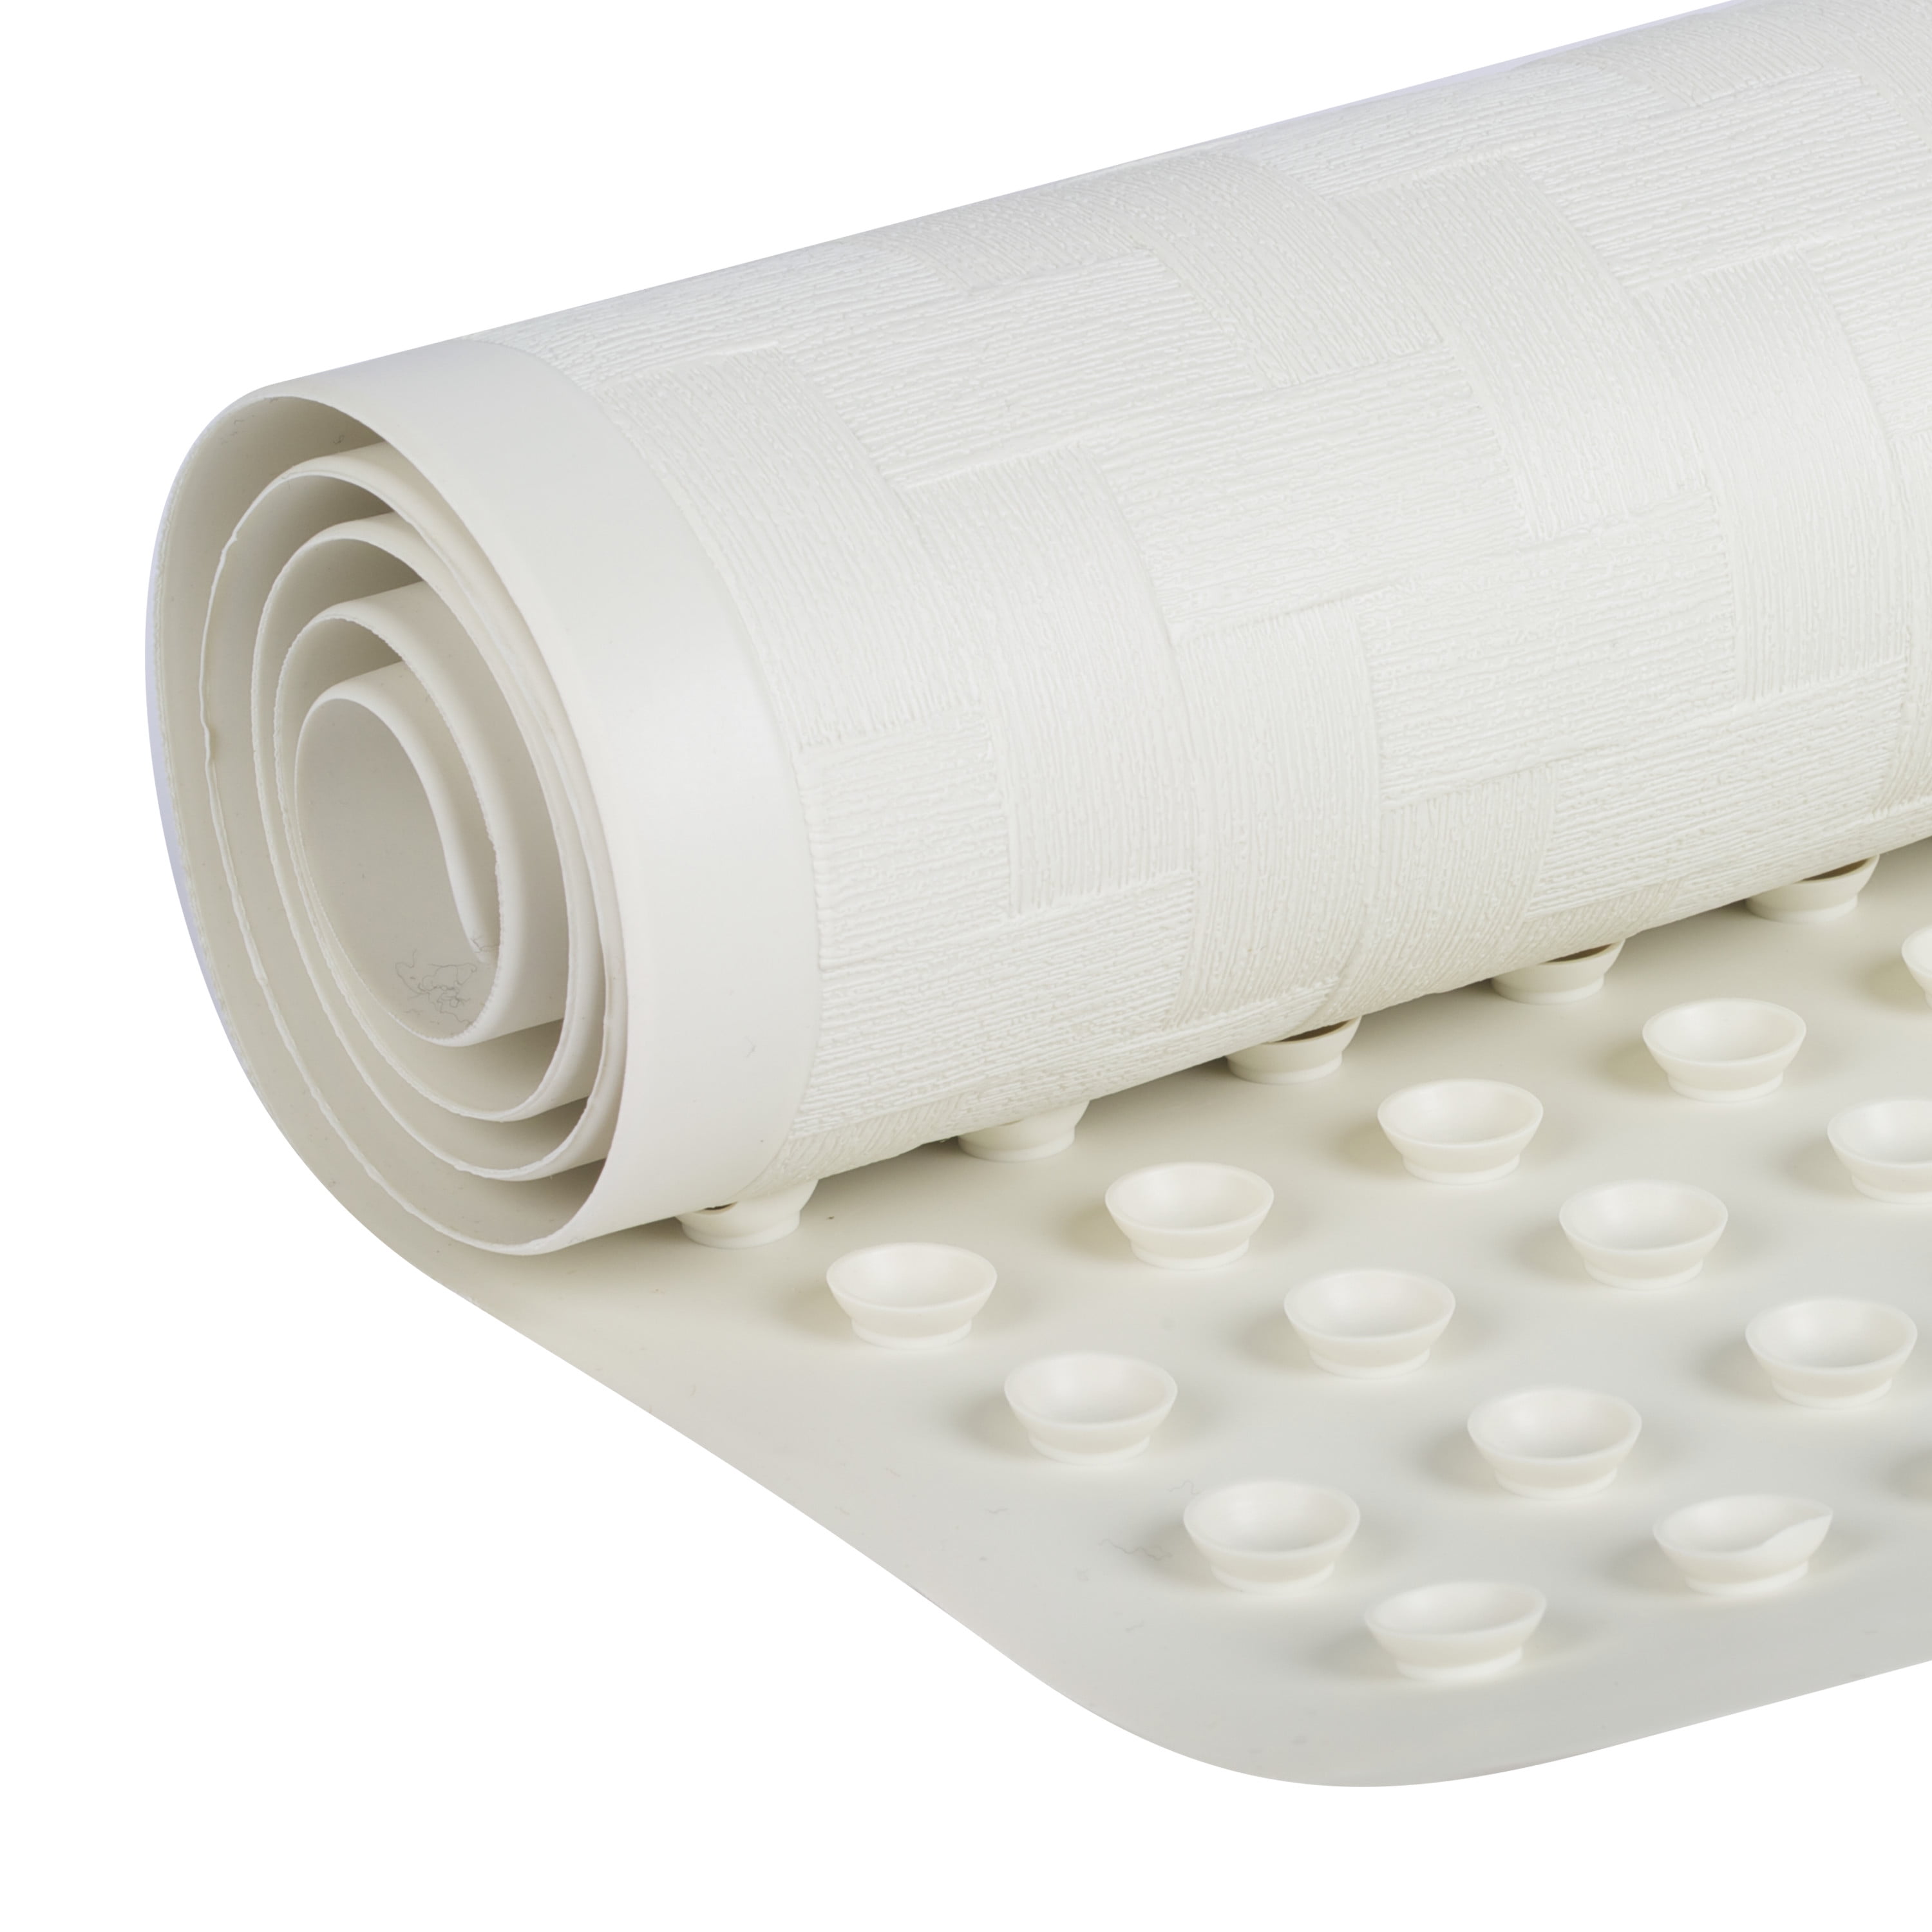 Mainstays White Rubber Non-Slip Bath Mat, 18 in. x 36 in.